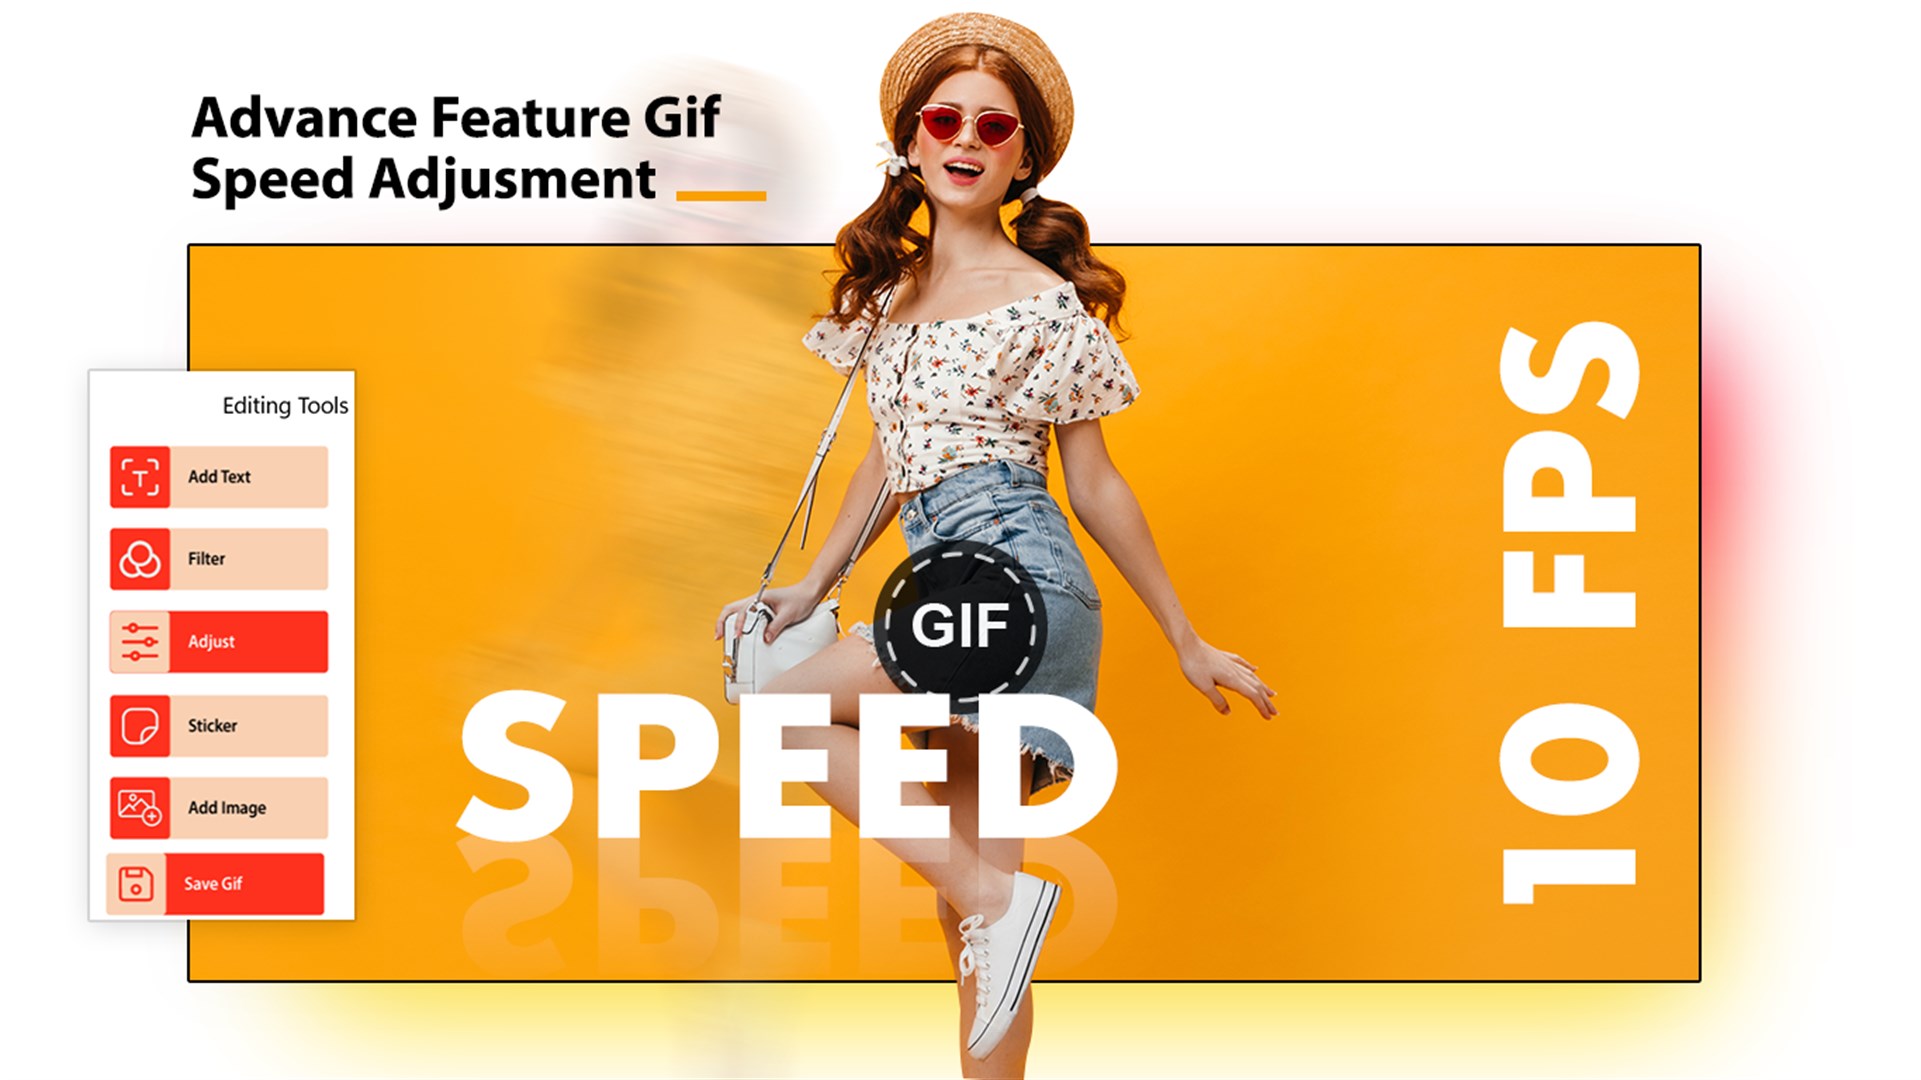 GIF Animator - Aplicativo oficial na Microsoft Store